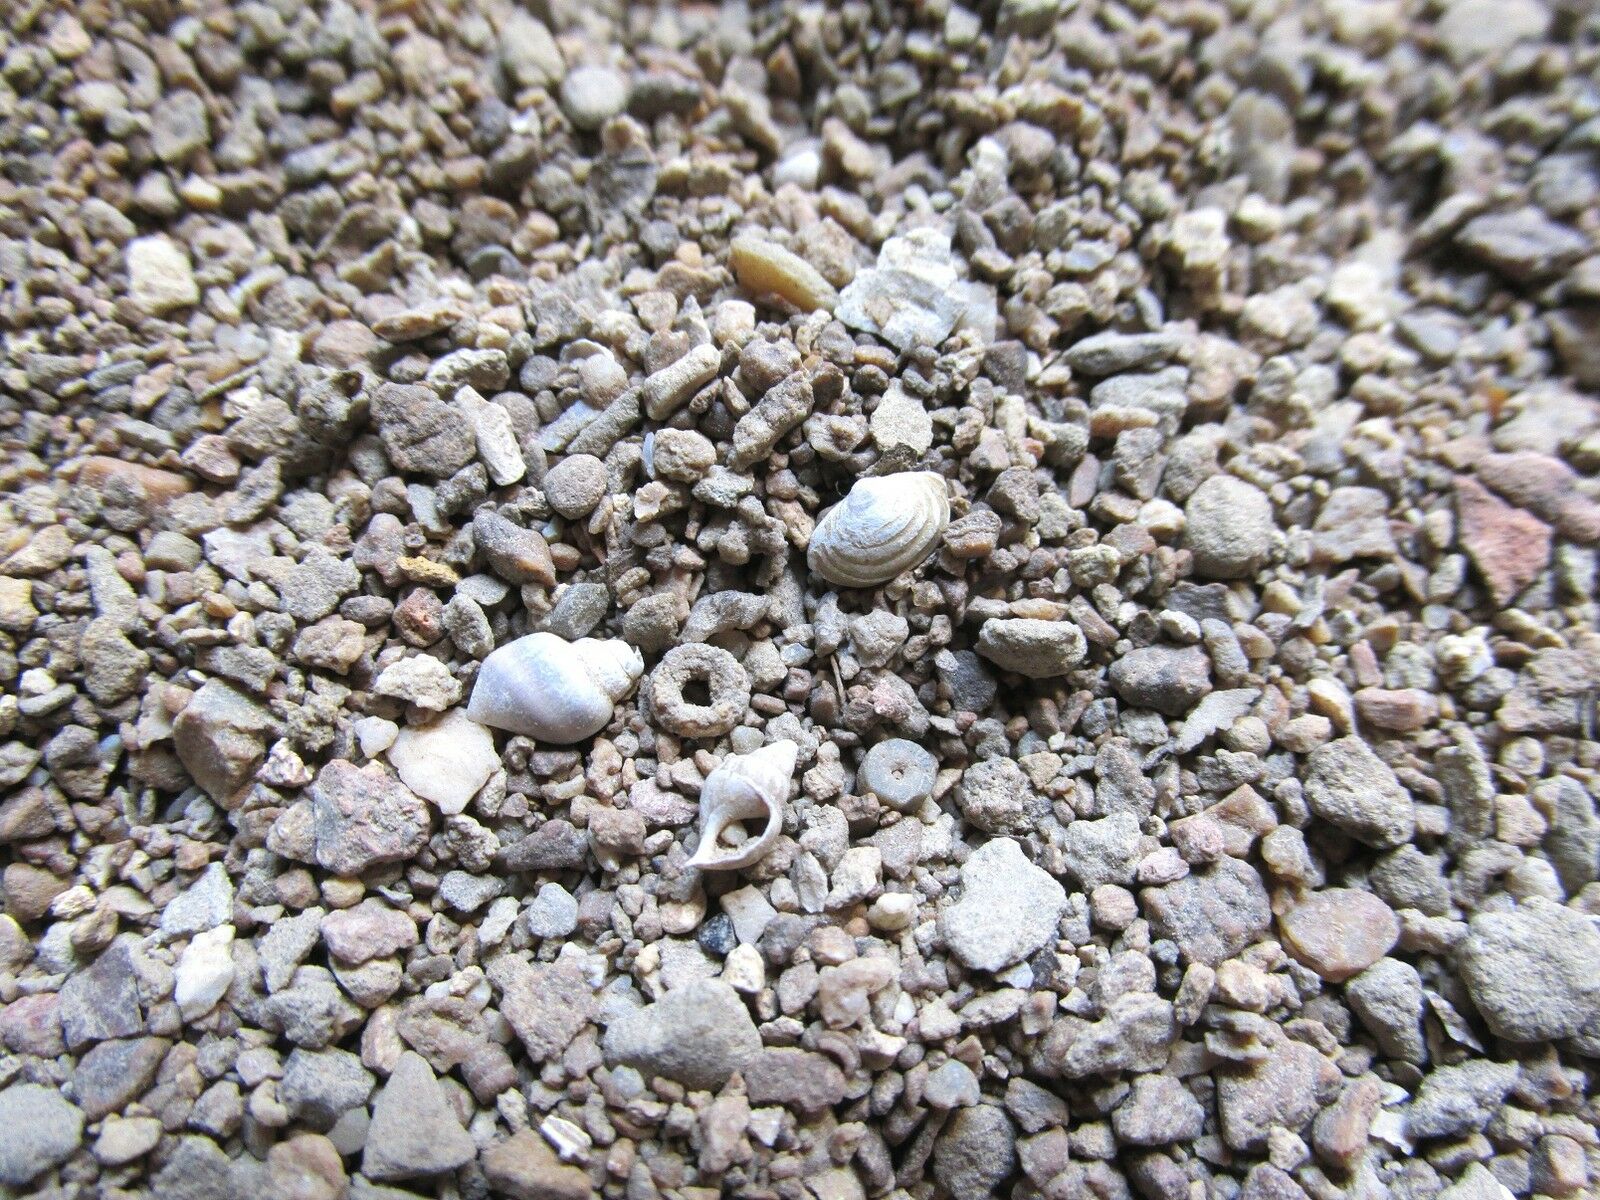 MICROFOSSIL Sand Gravel KENTUCKY micro fossils soil River Sample 200ml, 10oz wgt